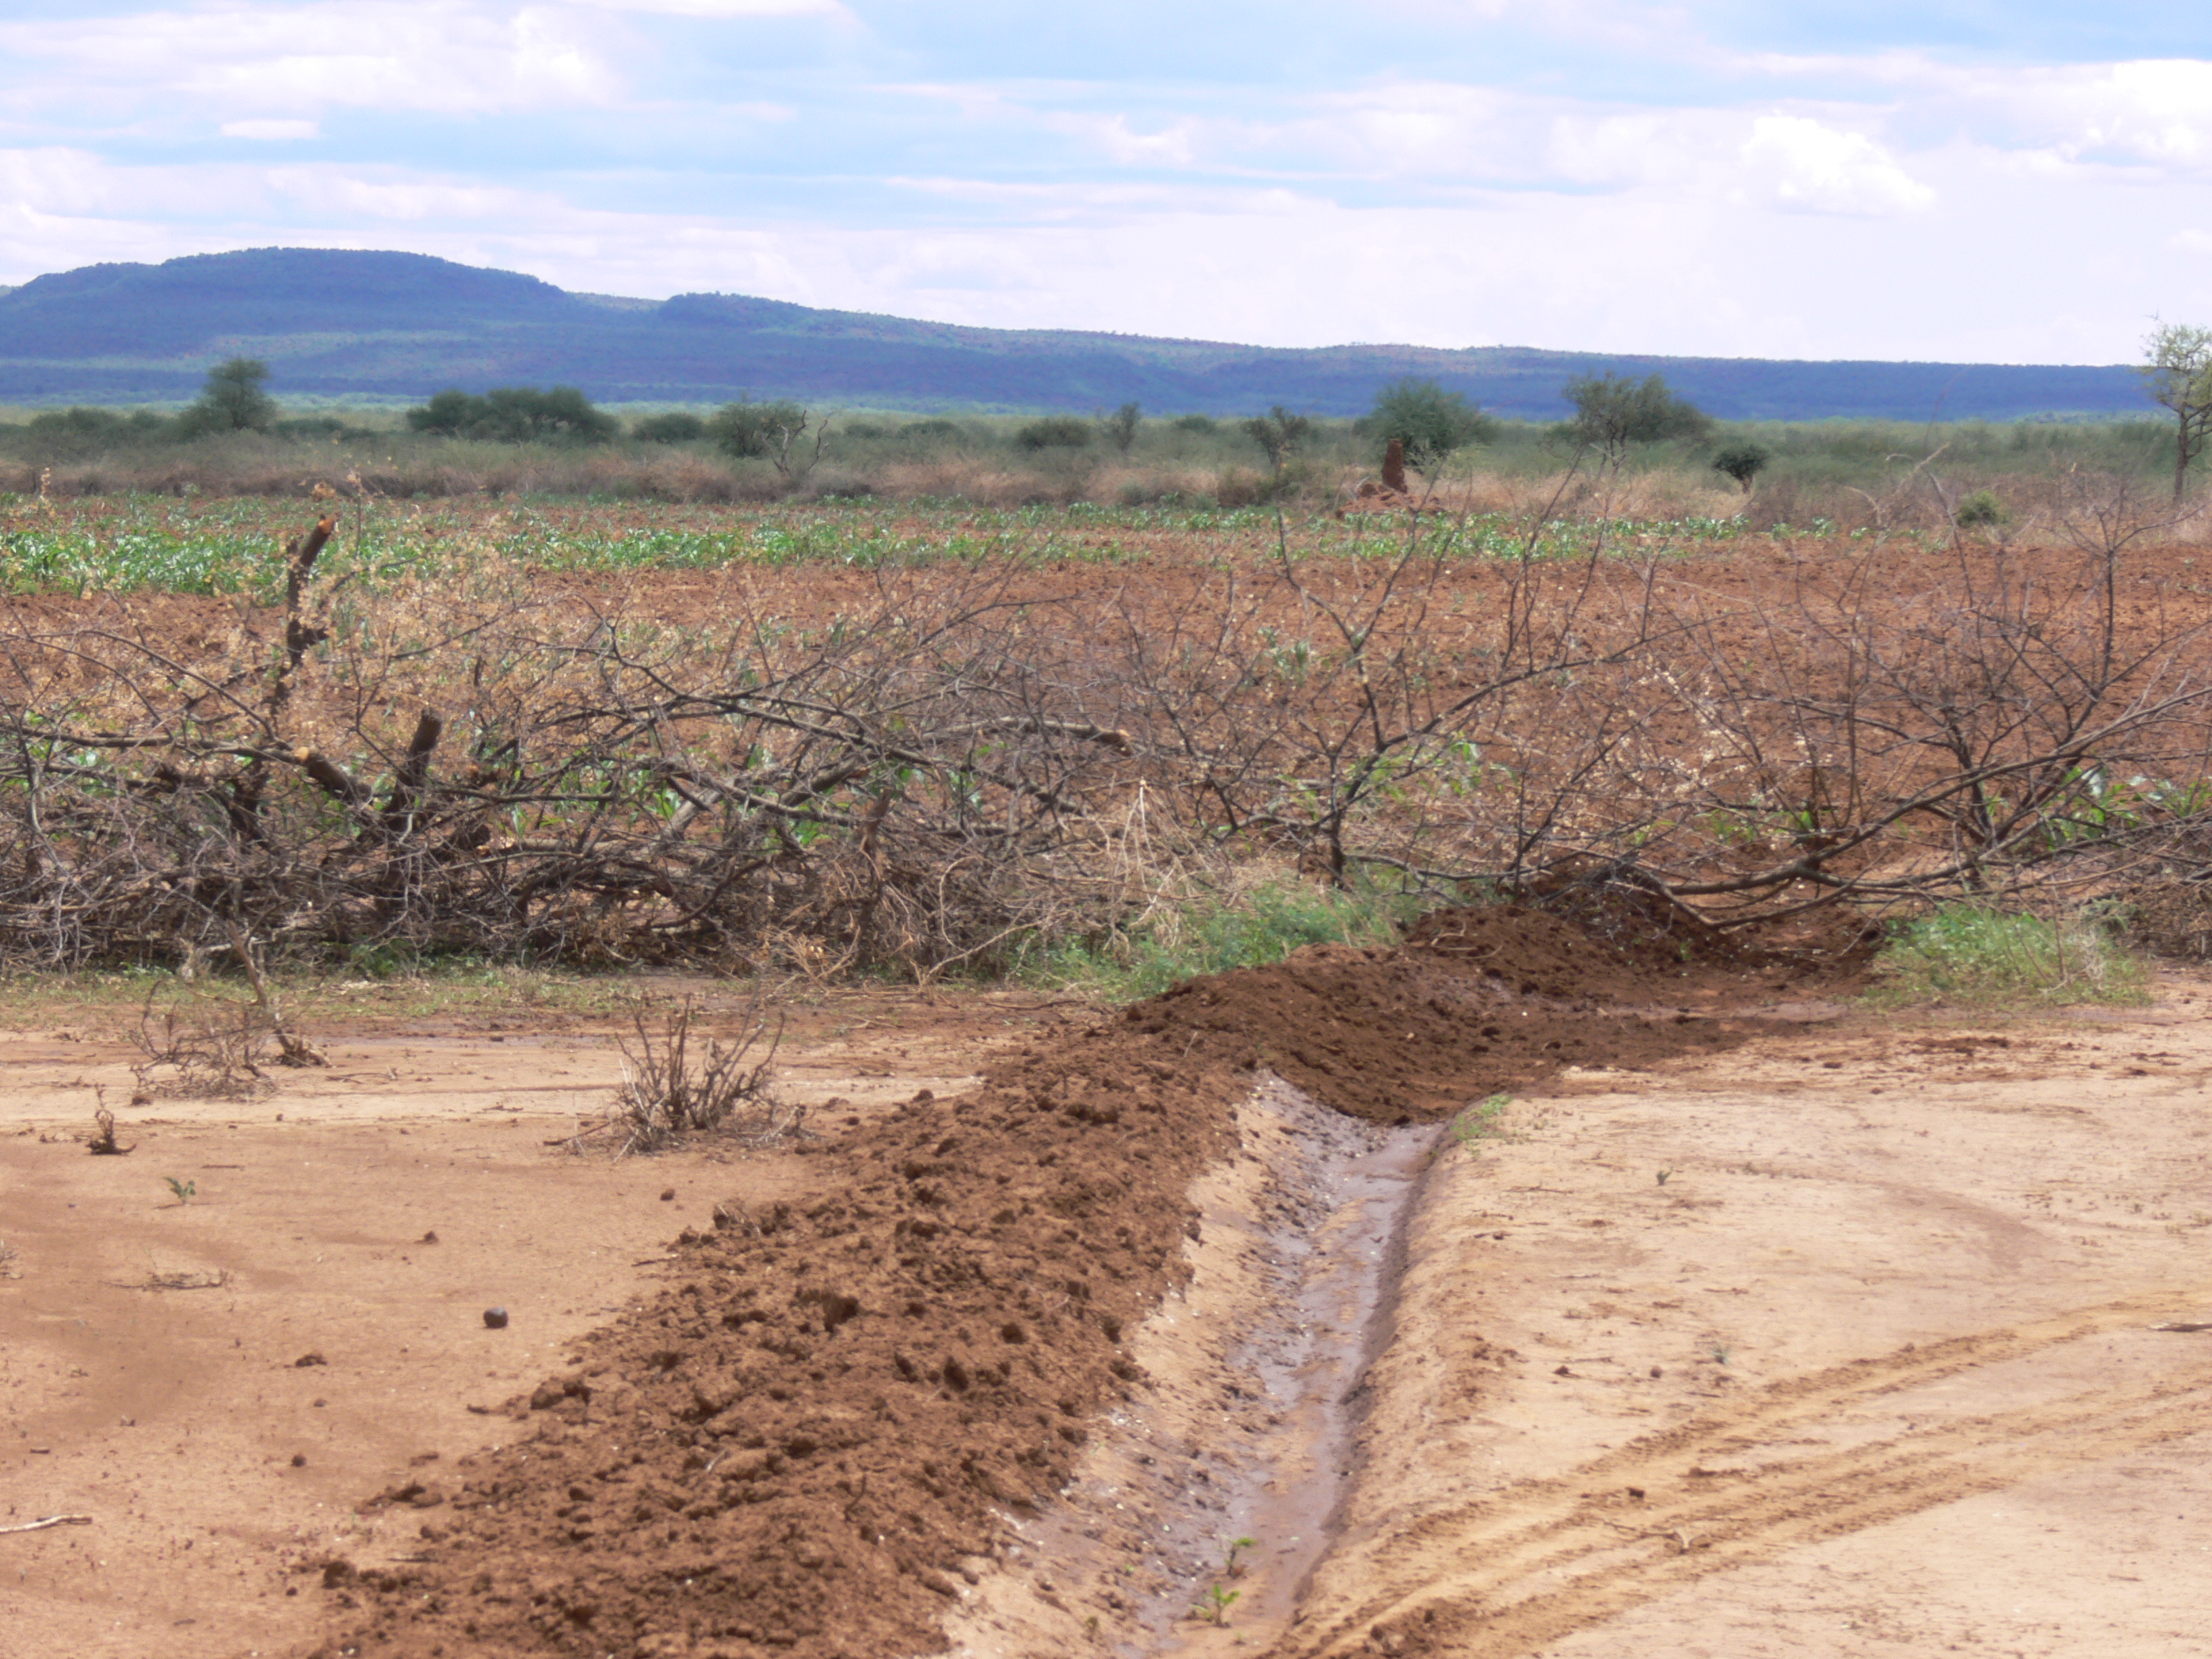 dryland cultivation in Kenya